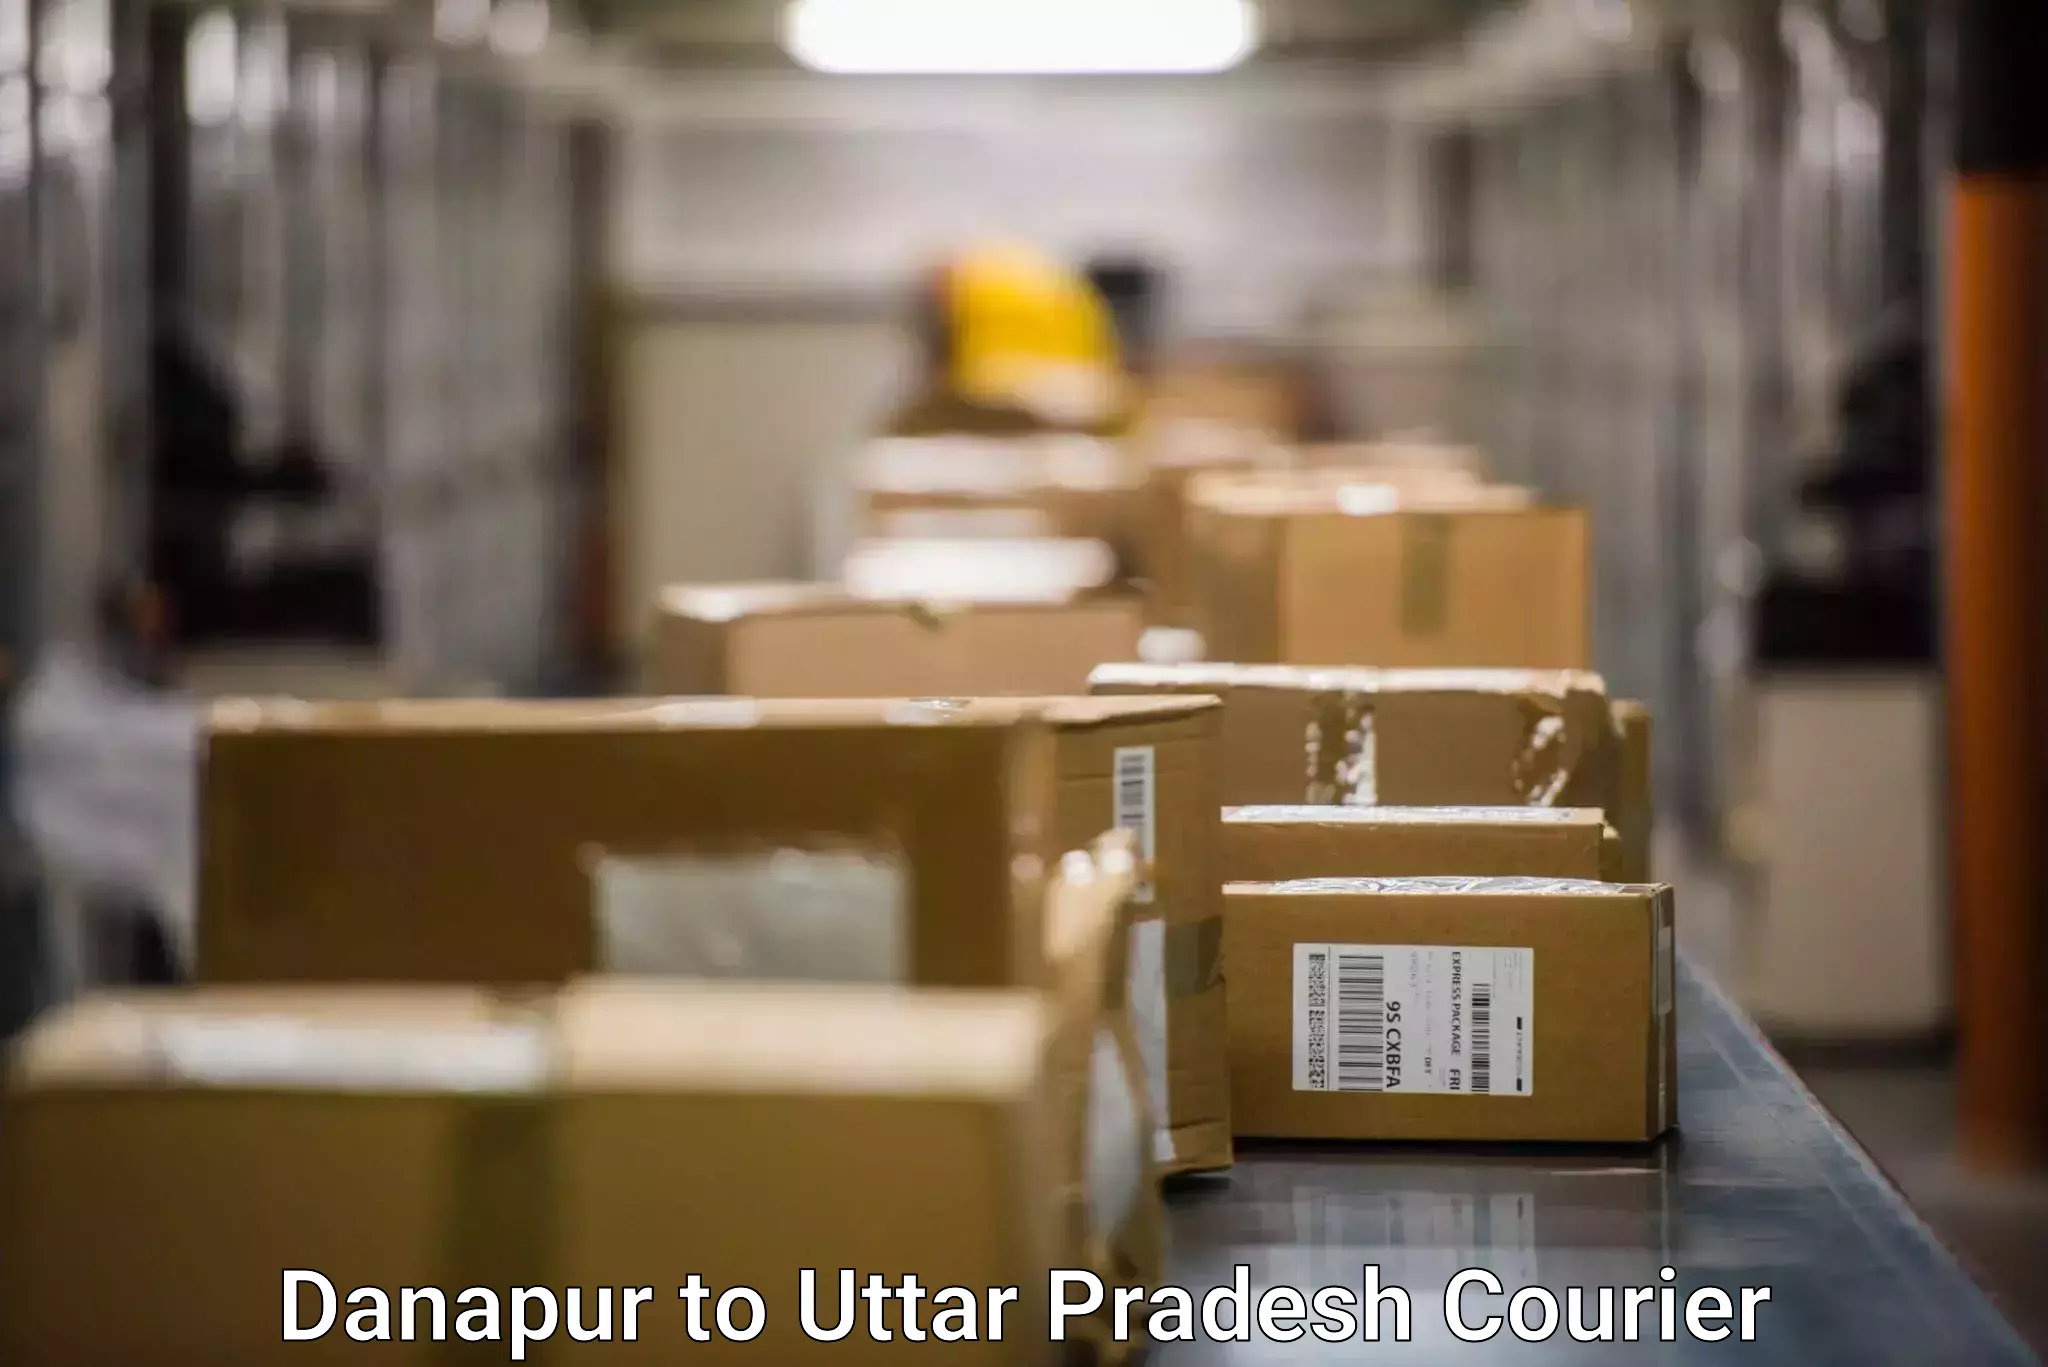 Tech-enabled shipping Danapur to Muzaffarnagar